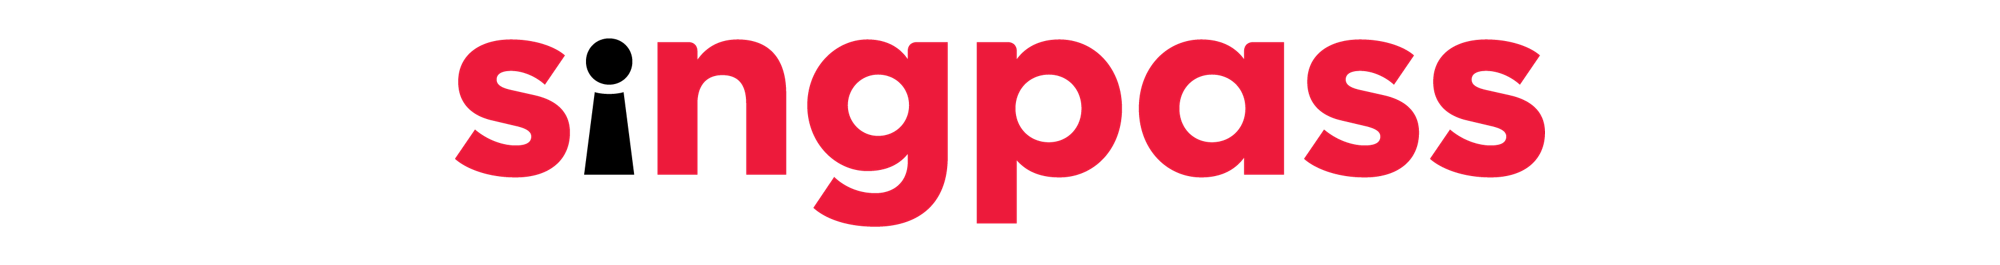 New Singpass logo